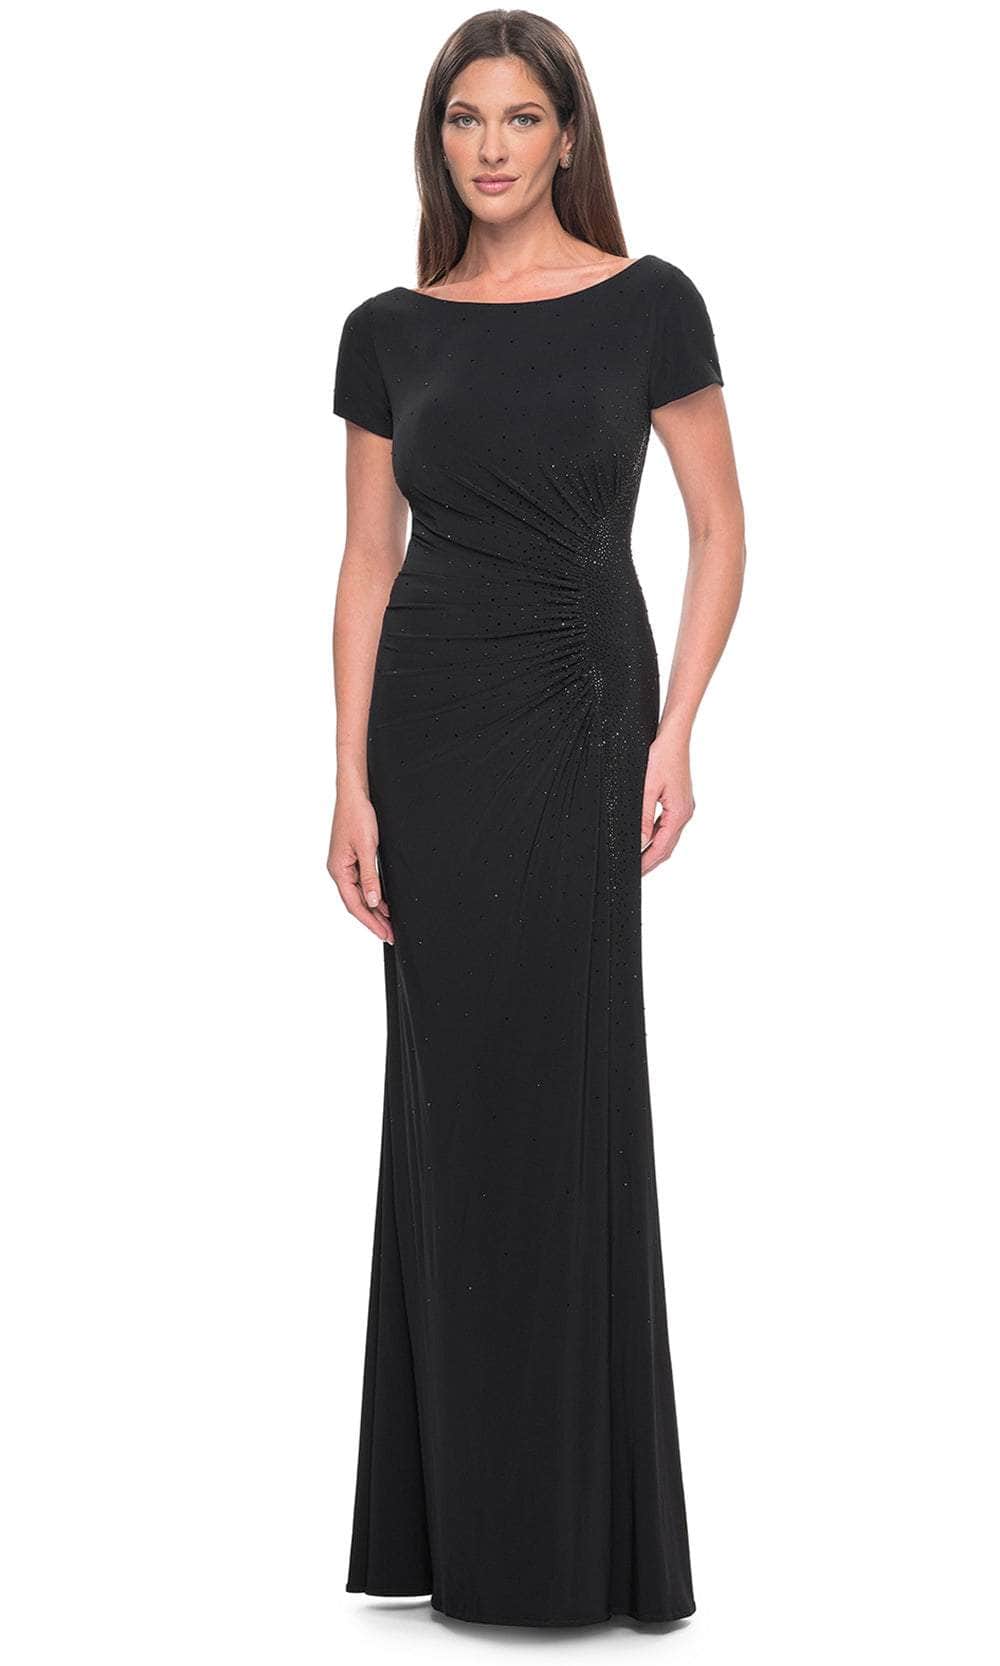 La Femme 31773 - Rhinestone Sheath Formal Dress Evening Dresses 4 / Black